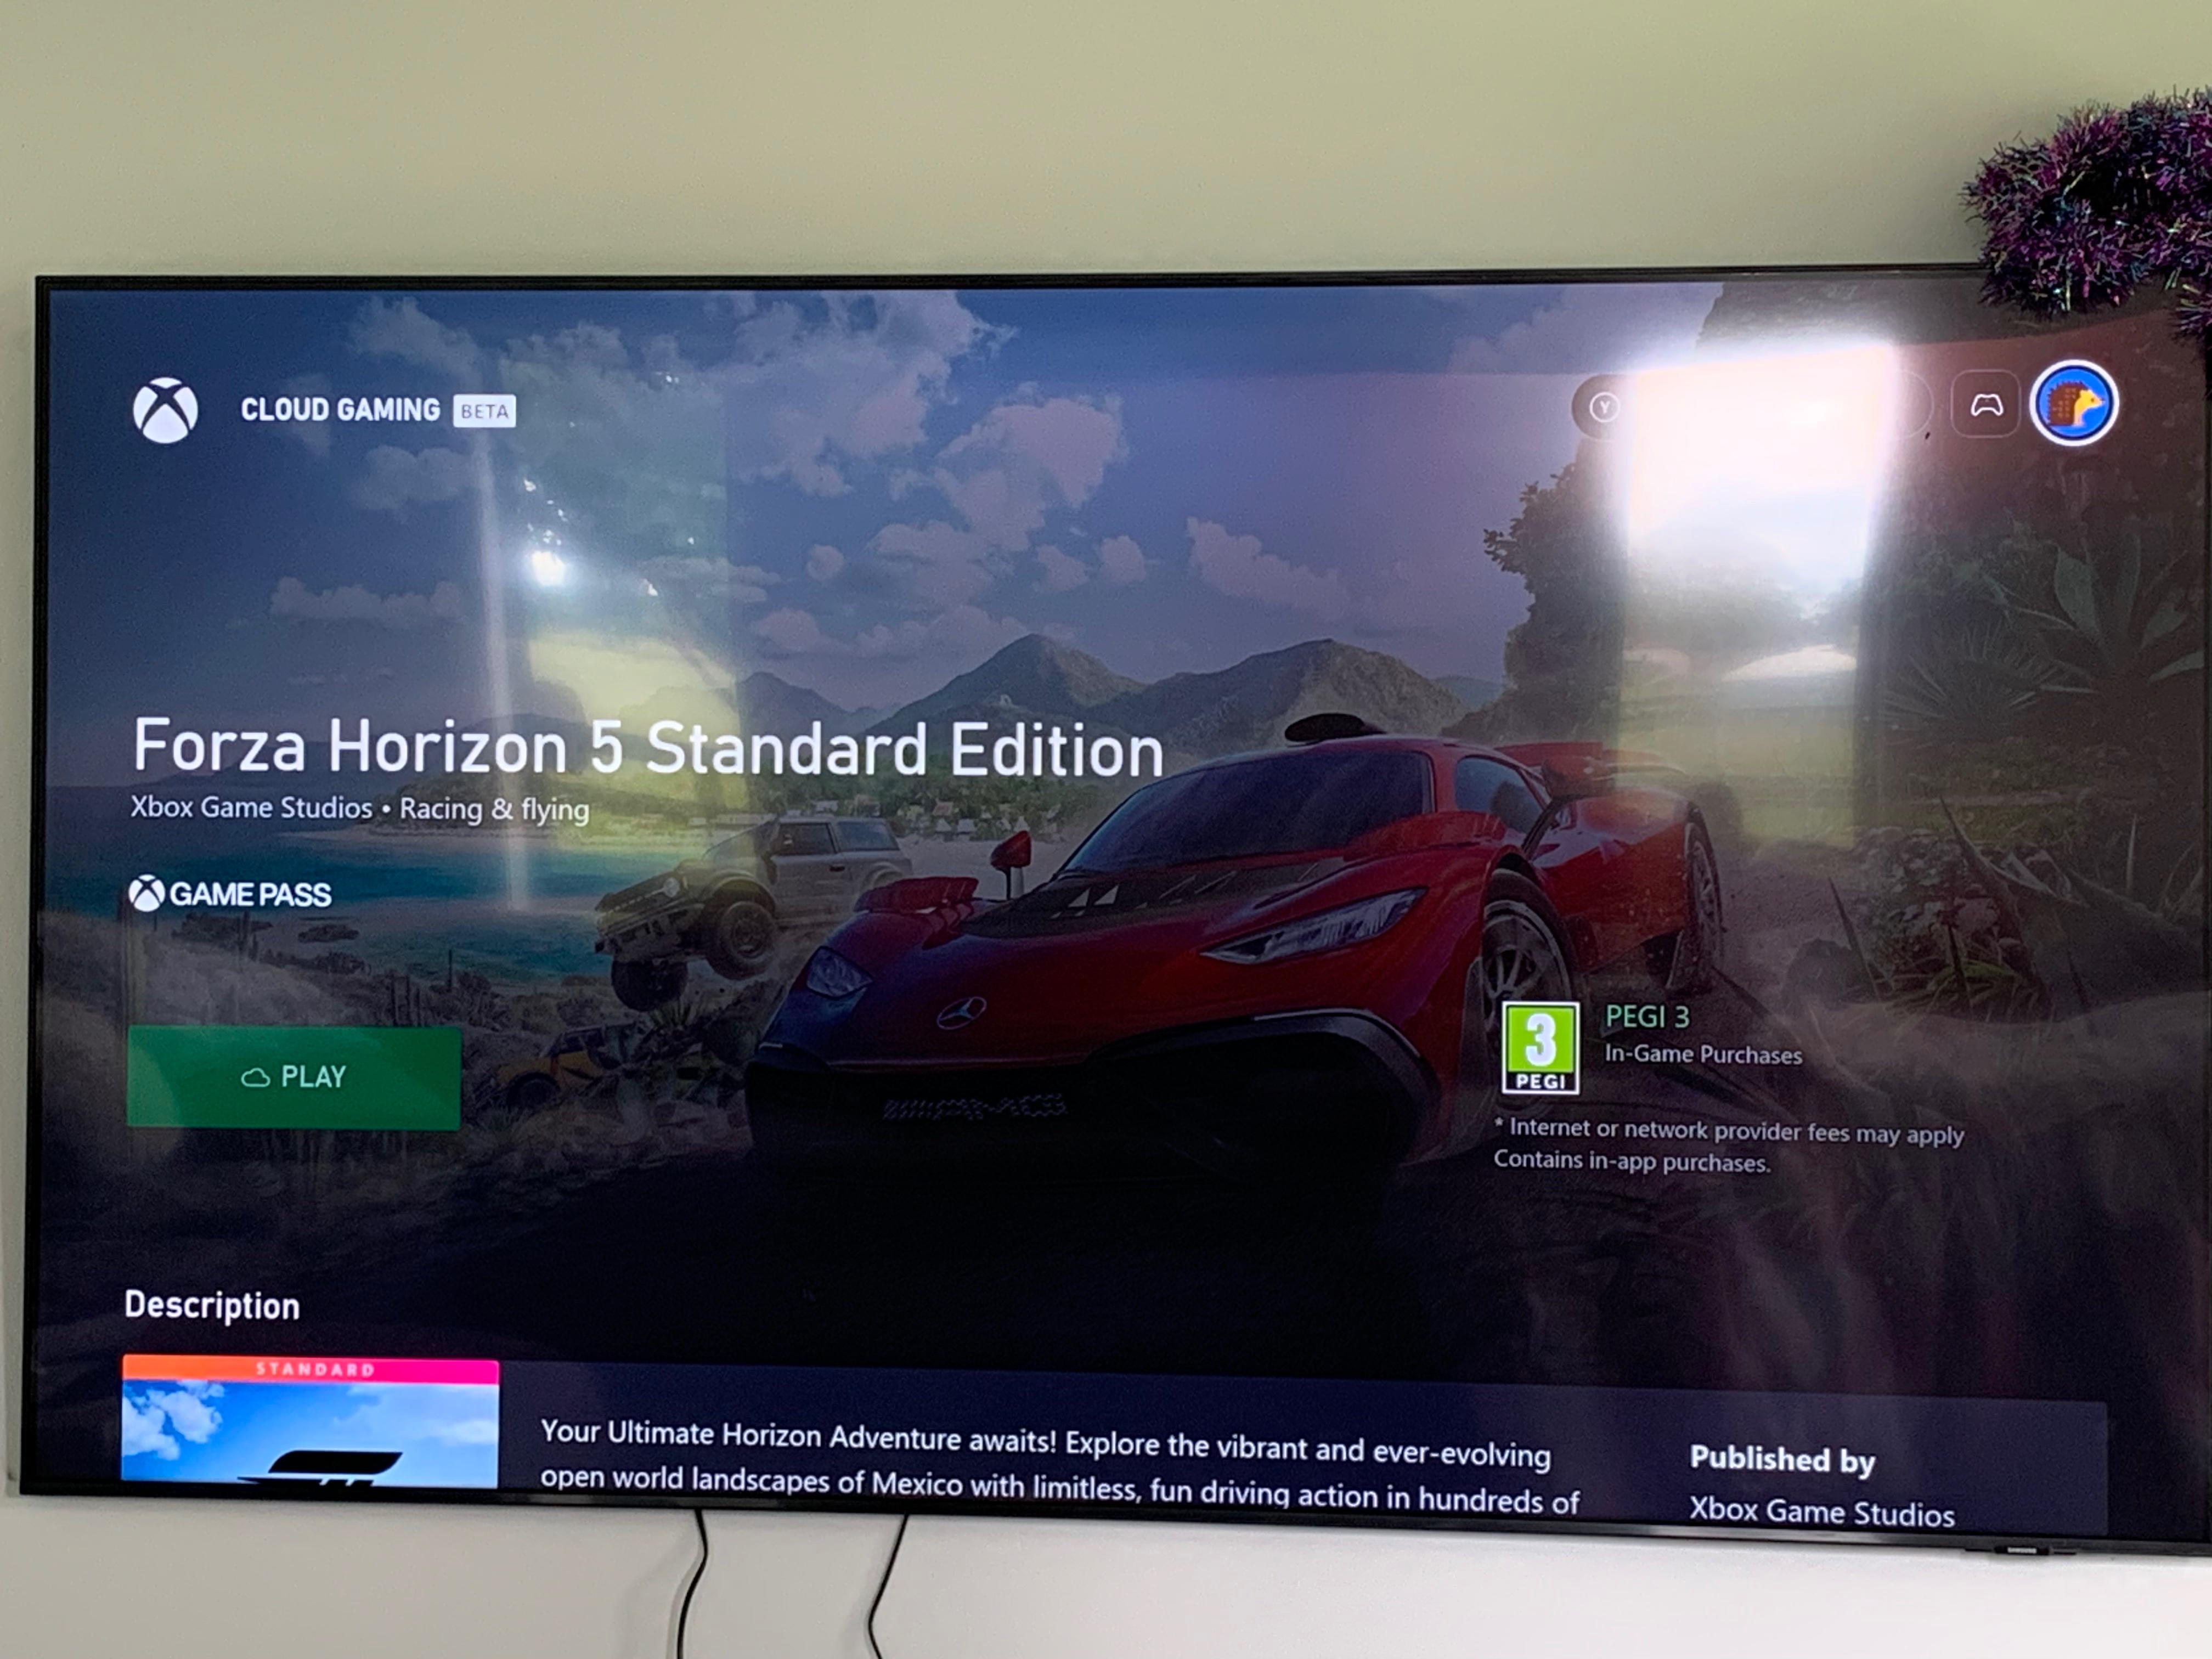 Won't let me play cloud games on Samsung tv - Microsoft Community